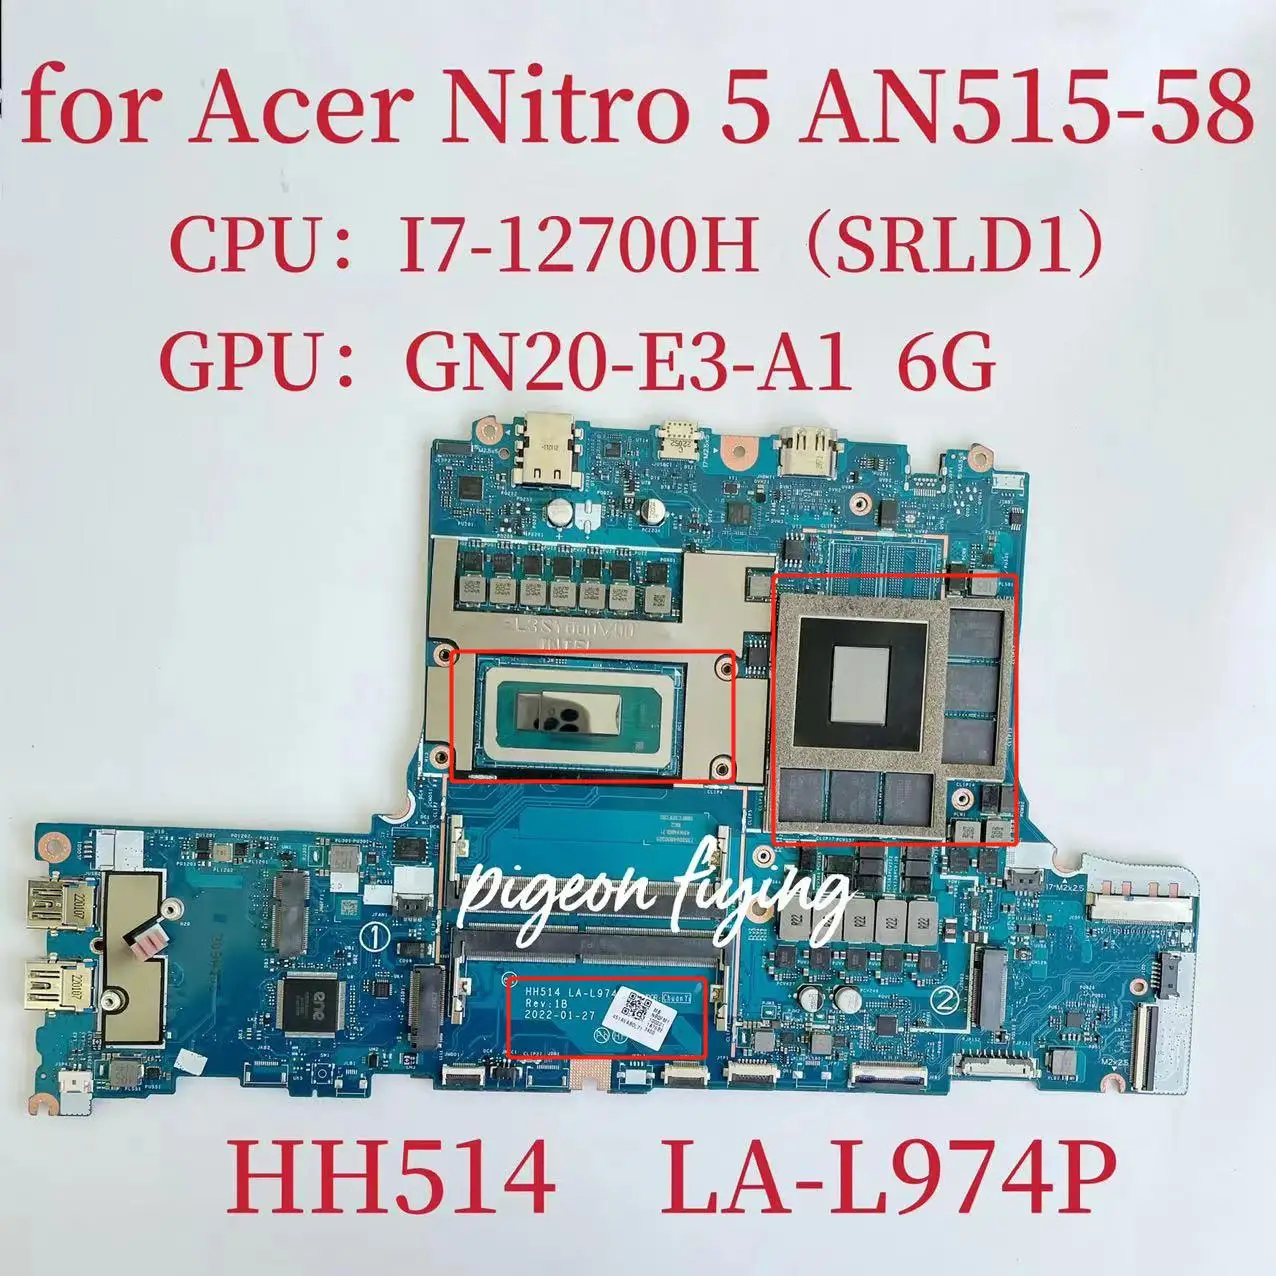 

HH514 LA-L974P Mainboard for Acer Nitro 5 AN515-58 Laptop Motherboard CPU:I7-12700H SRLD1 GPU:GN20-E3-A1 6G DDR4 100% Test OK